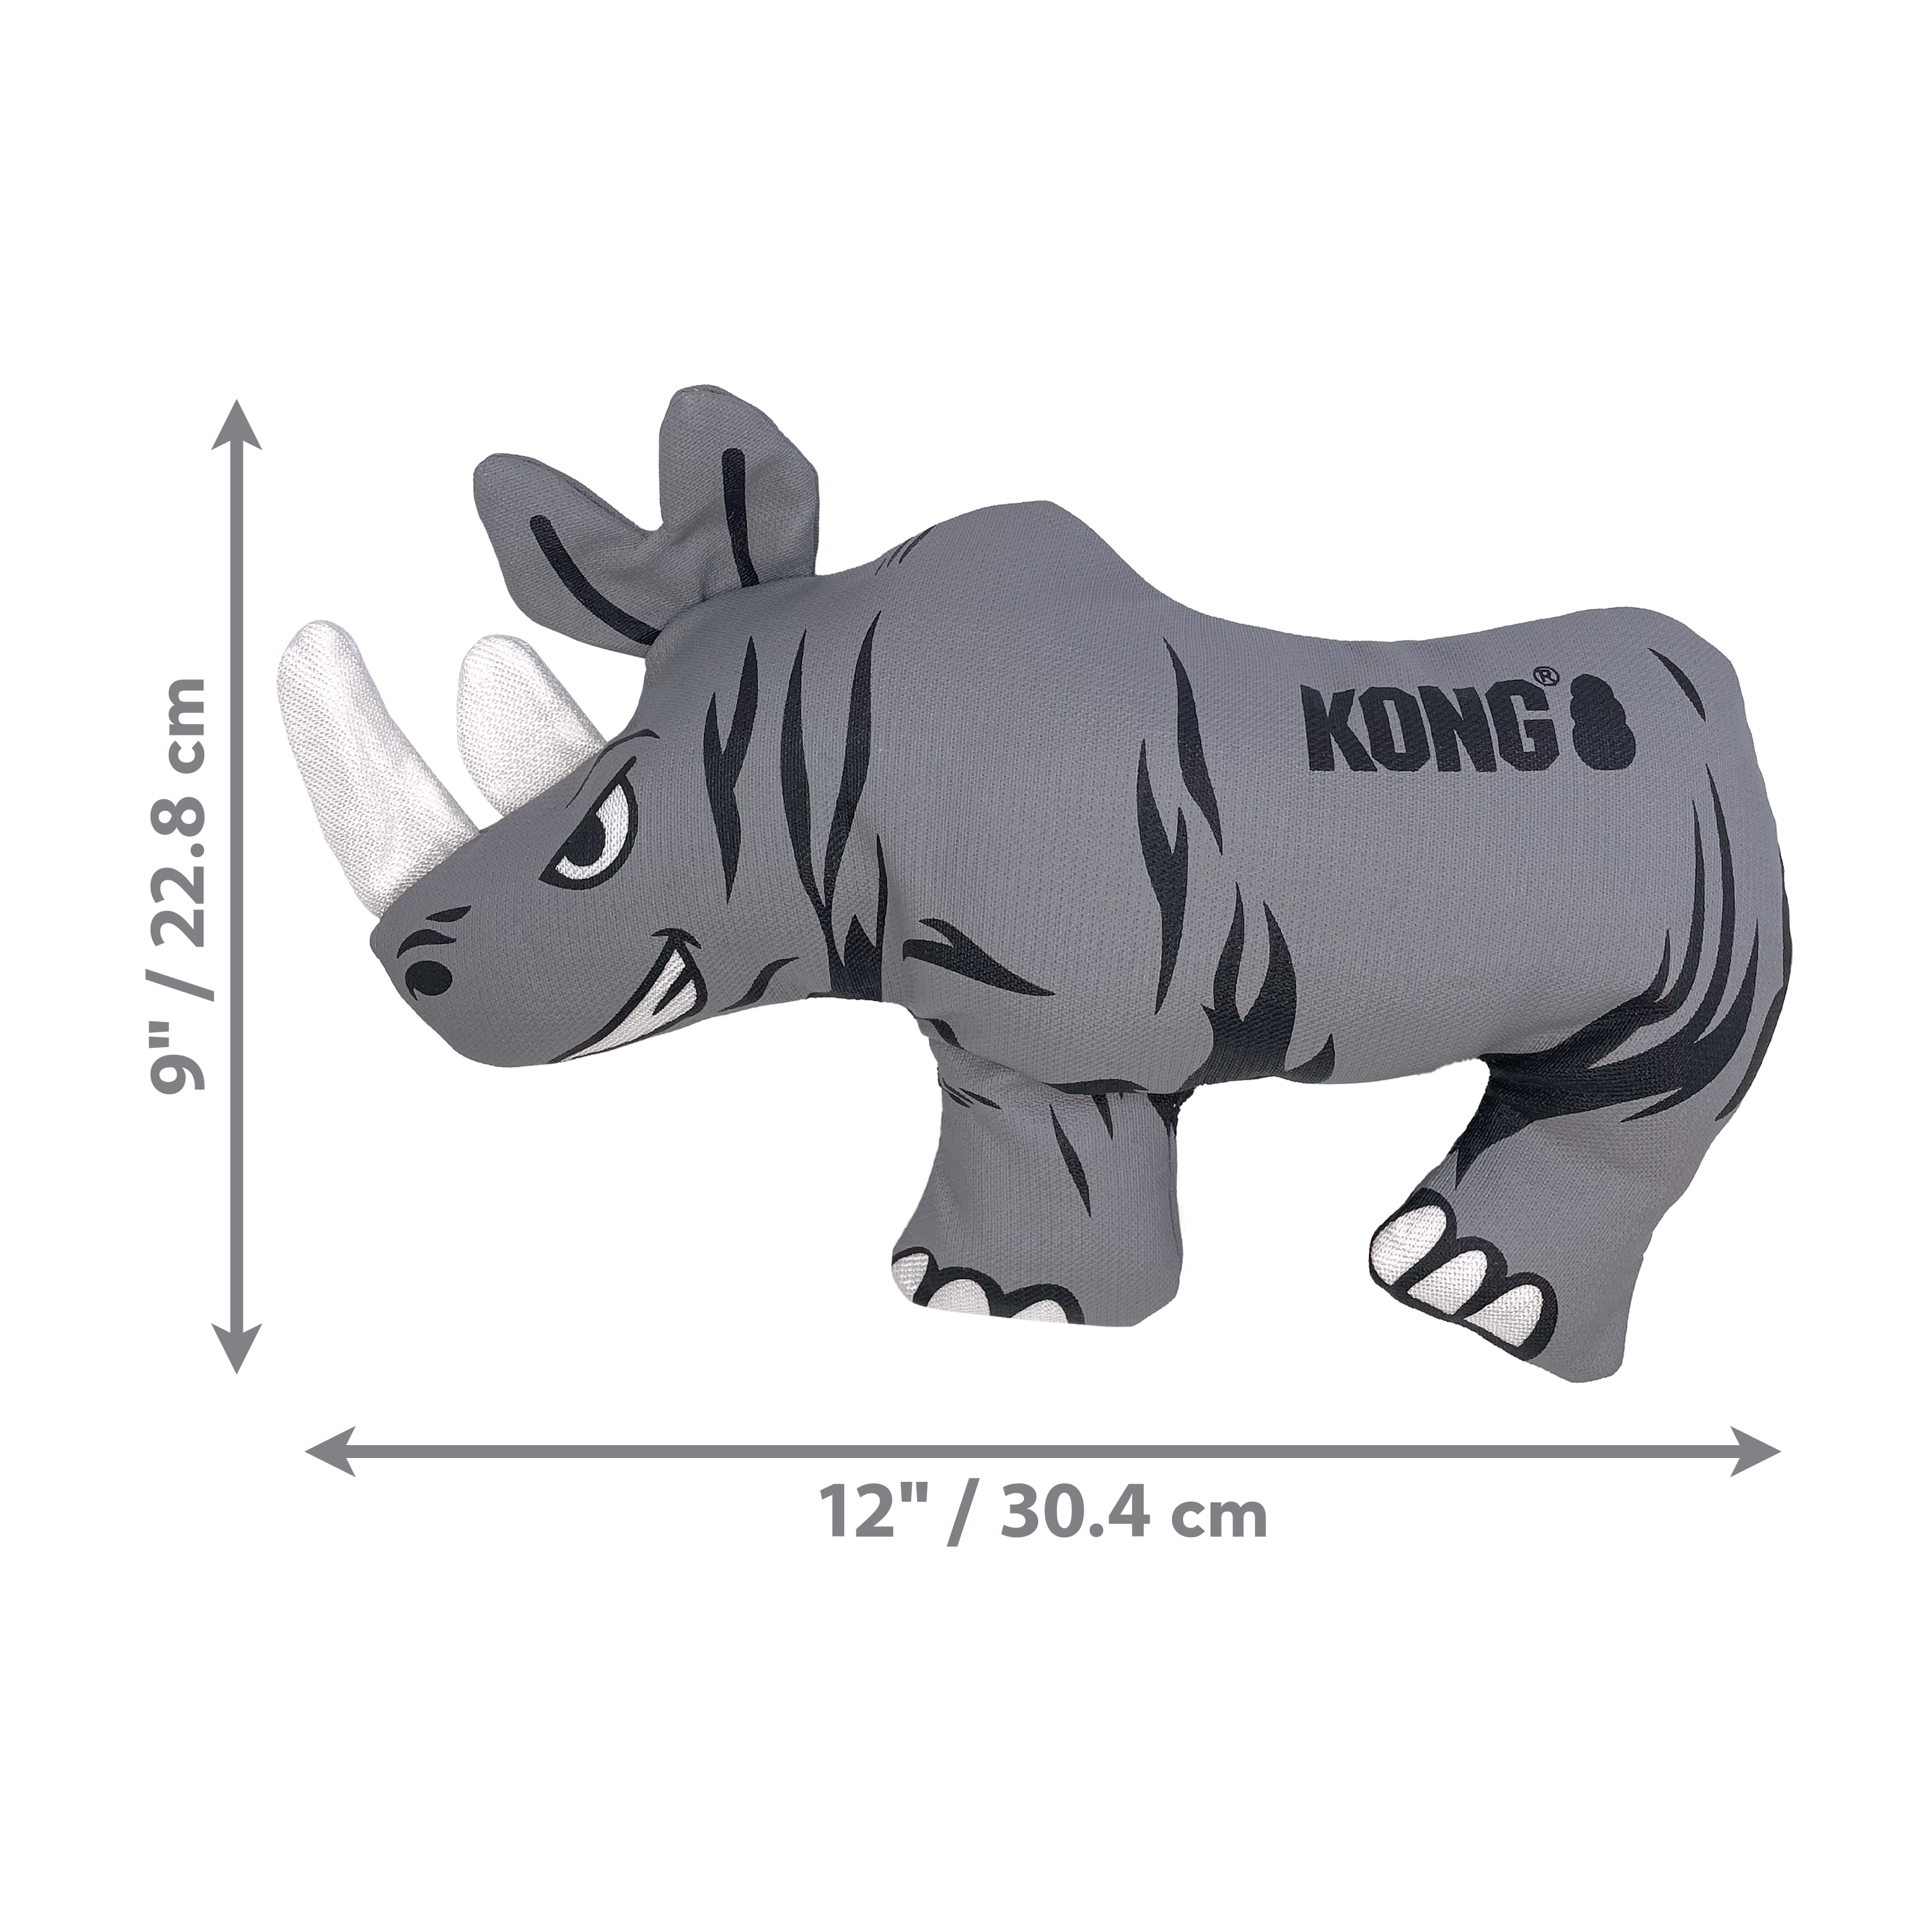 Maxx Rhino dimoffpack termékkép